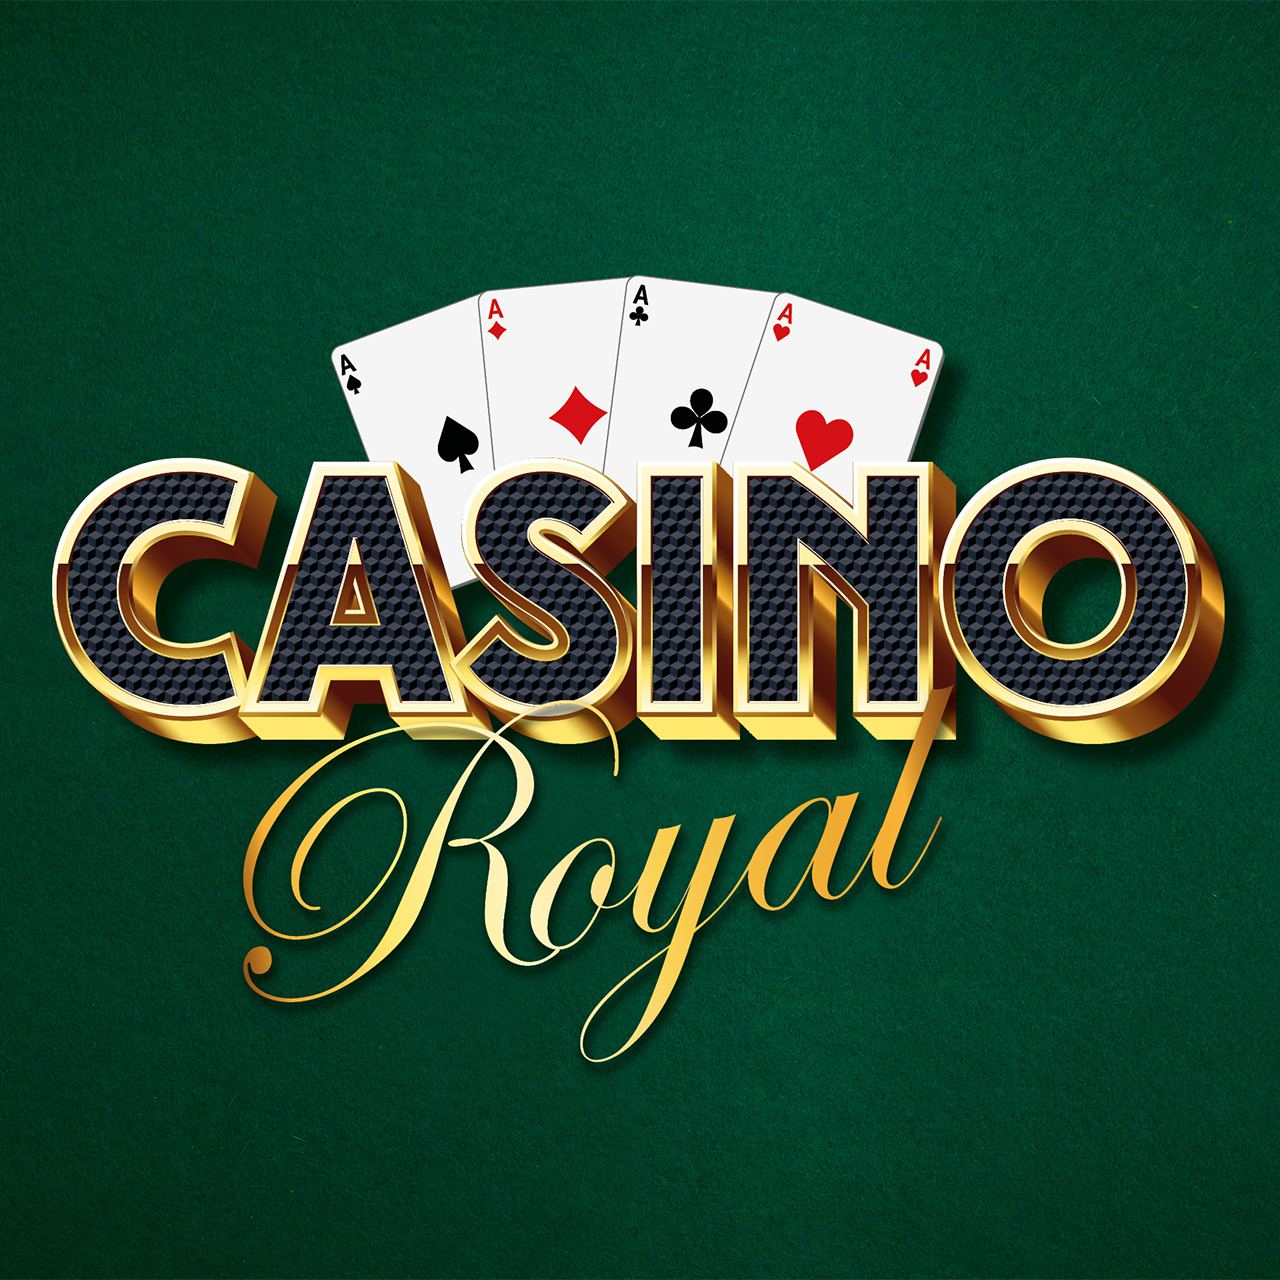 Casino Royal